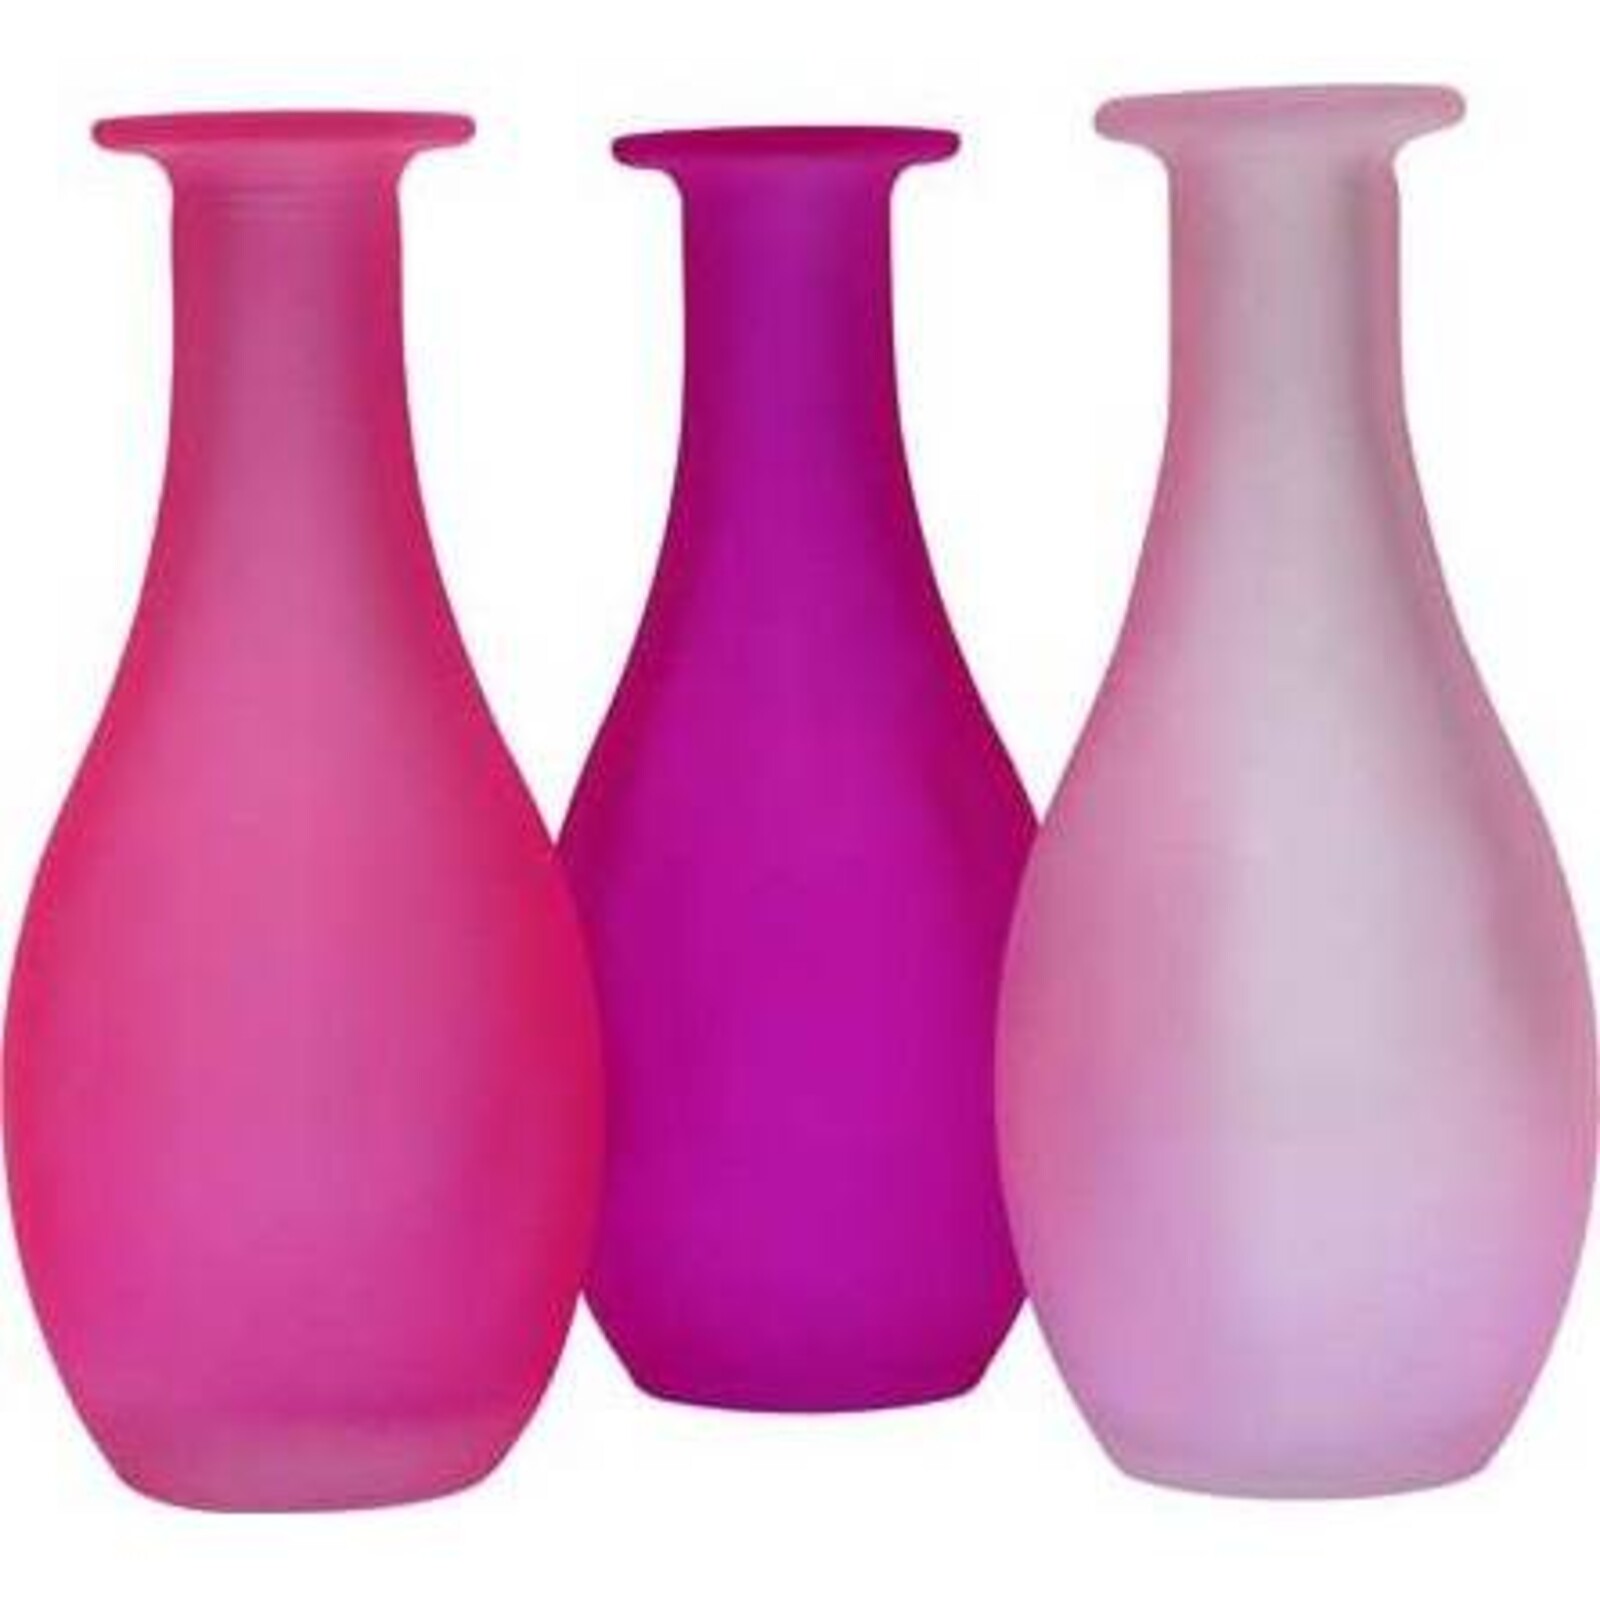 Trio Bottles - Pink Shade Drop